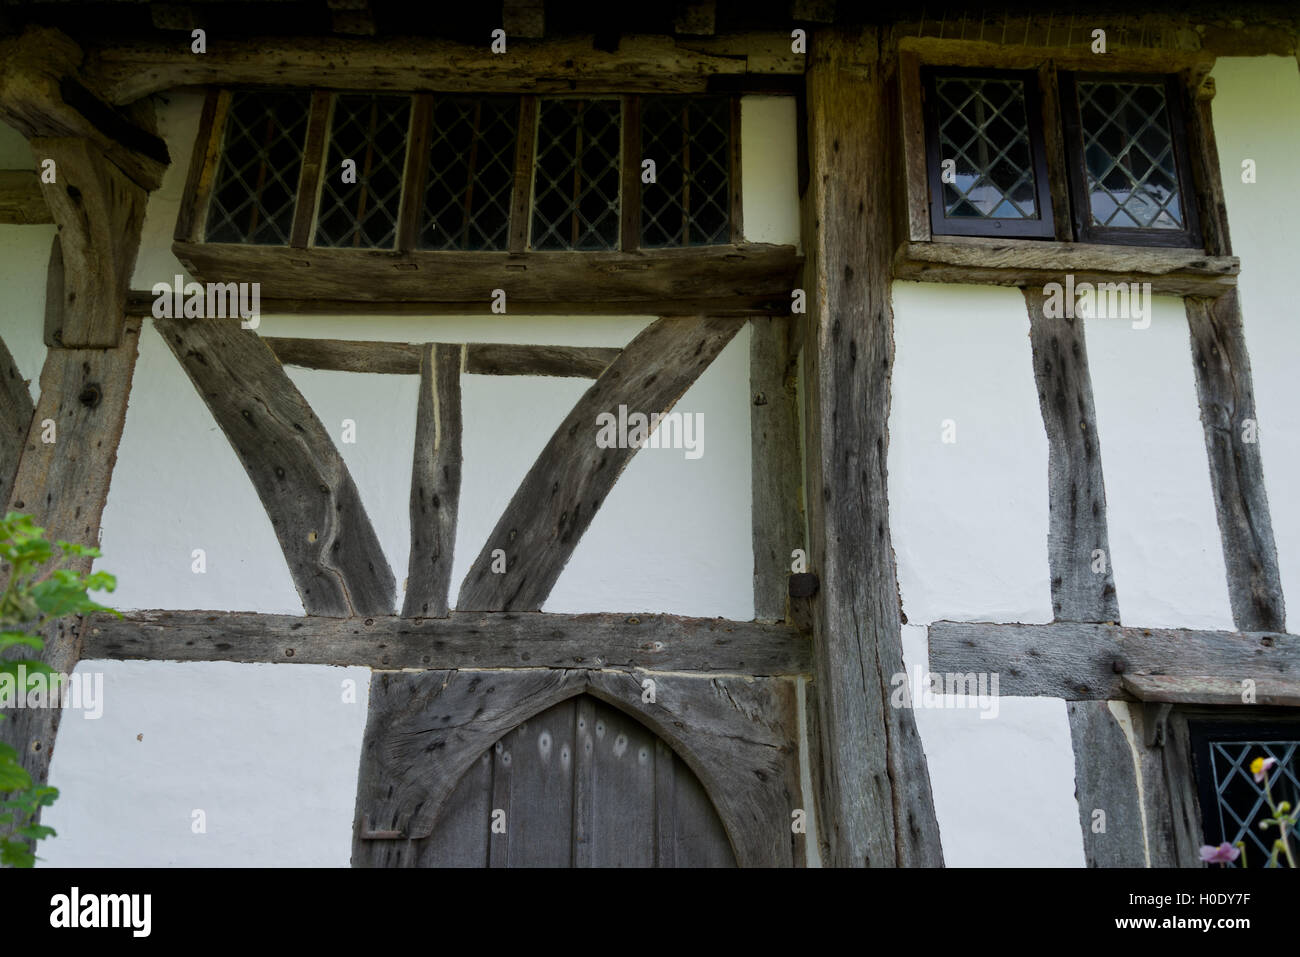 Edificio de entramado de madera en Inglaterra, Reino Unido. Estructura de madera de roble con cañas y barro sedimentado. Pintadas con cal cal. Foto de stock